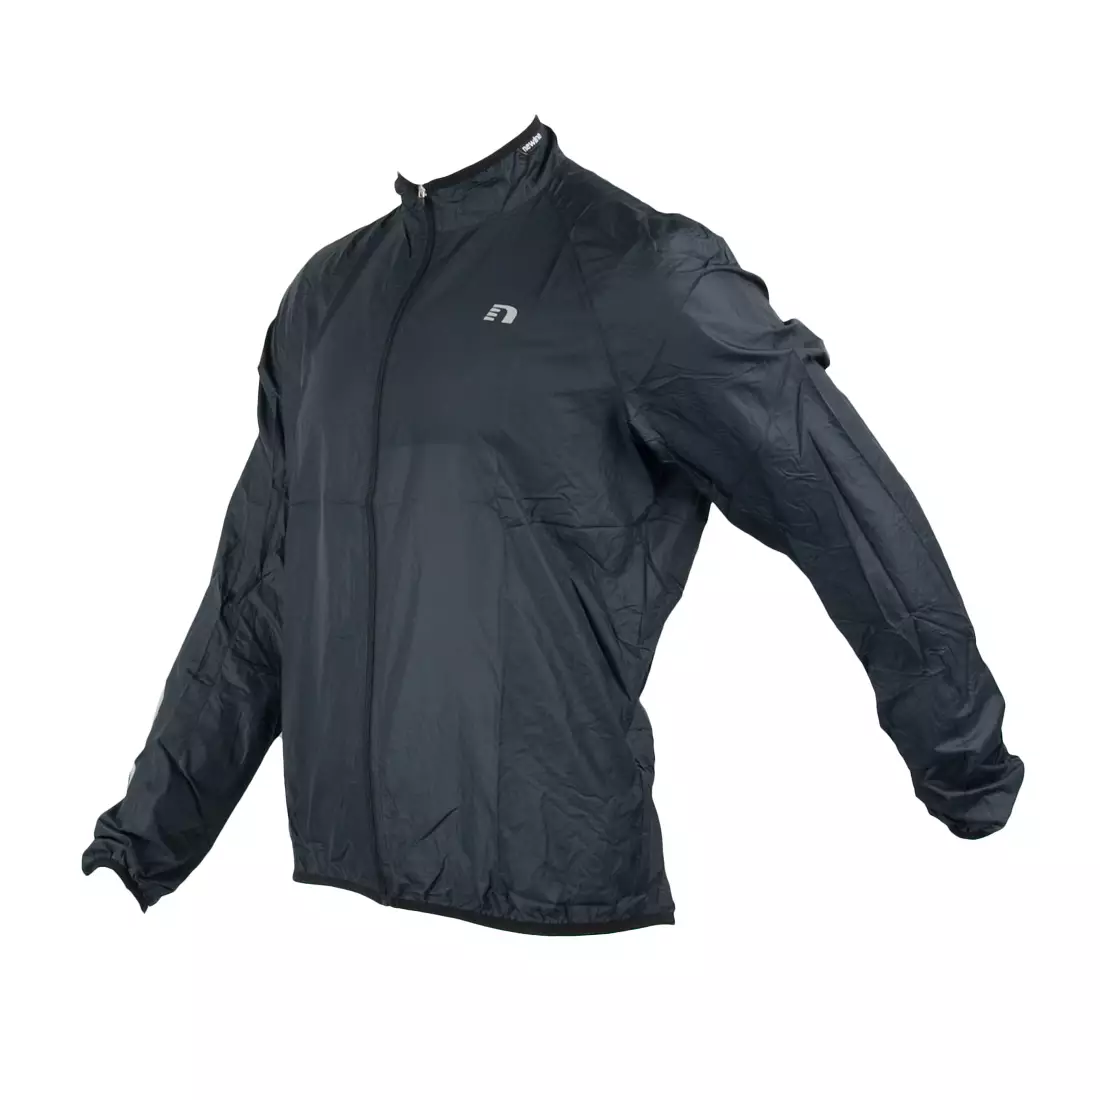 JACKET NEWLINE WINDPACK - jacket sport ultra-ușor 14176-060, culoare: negru